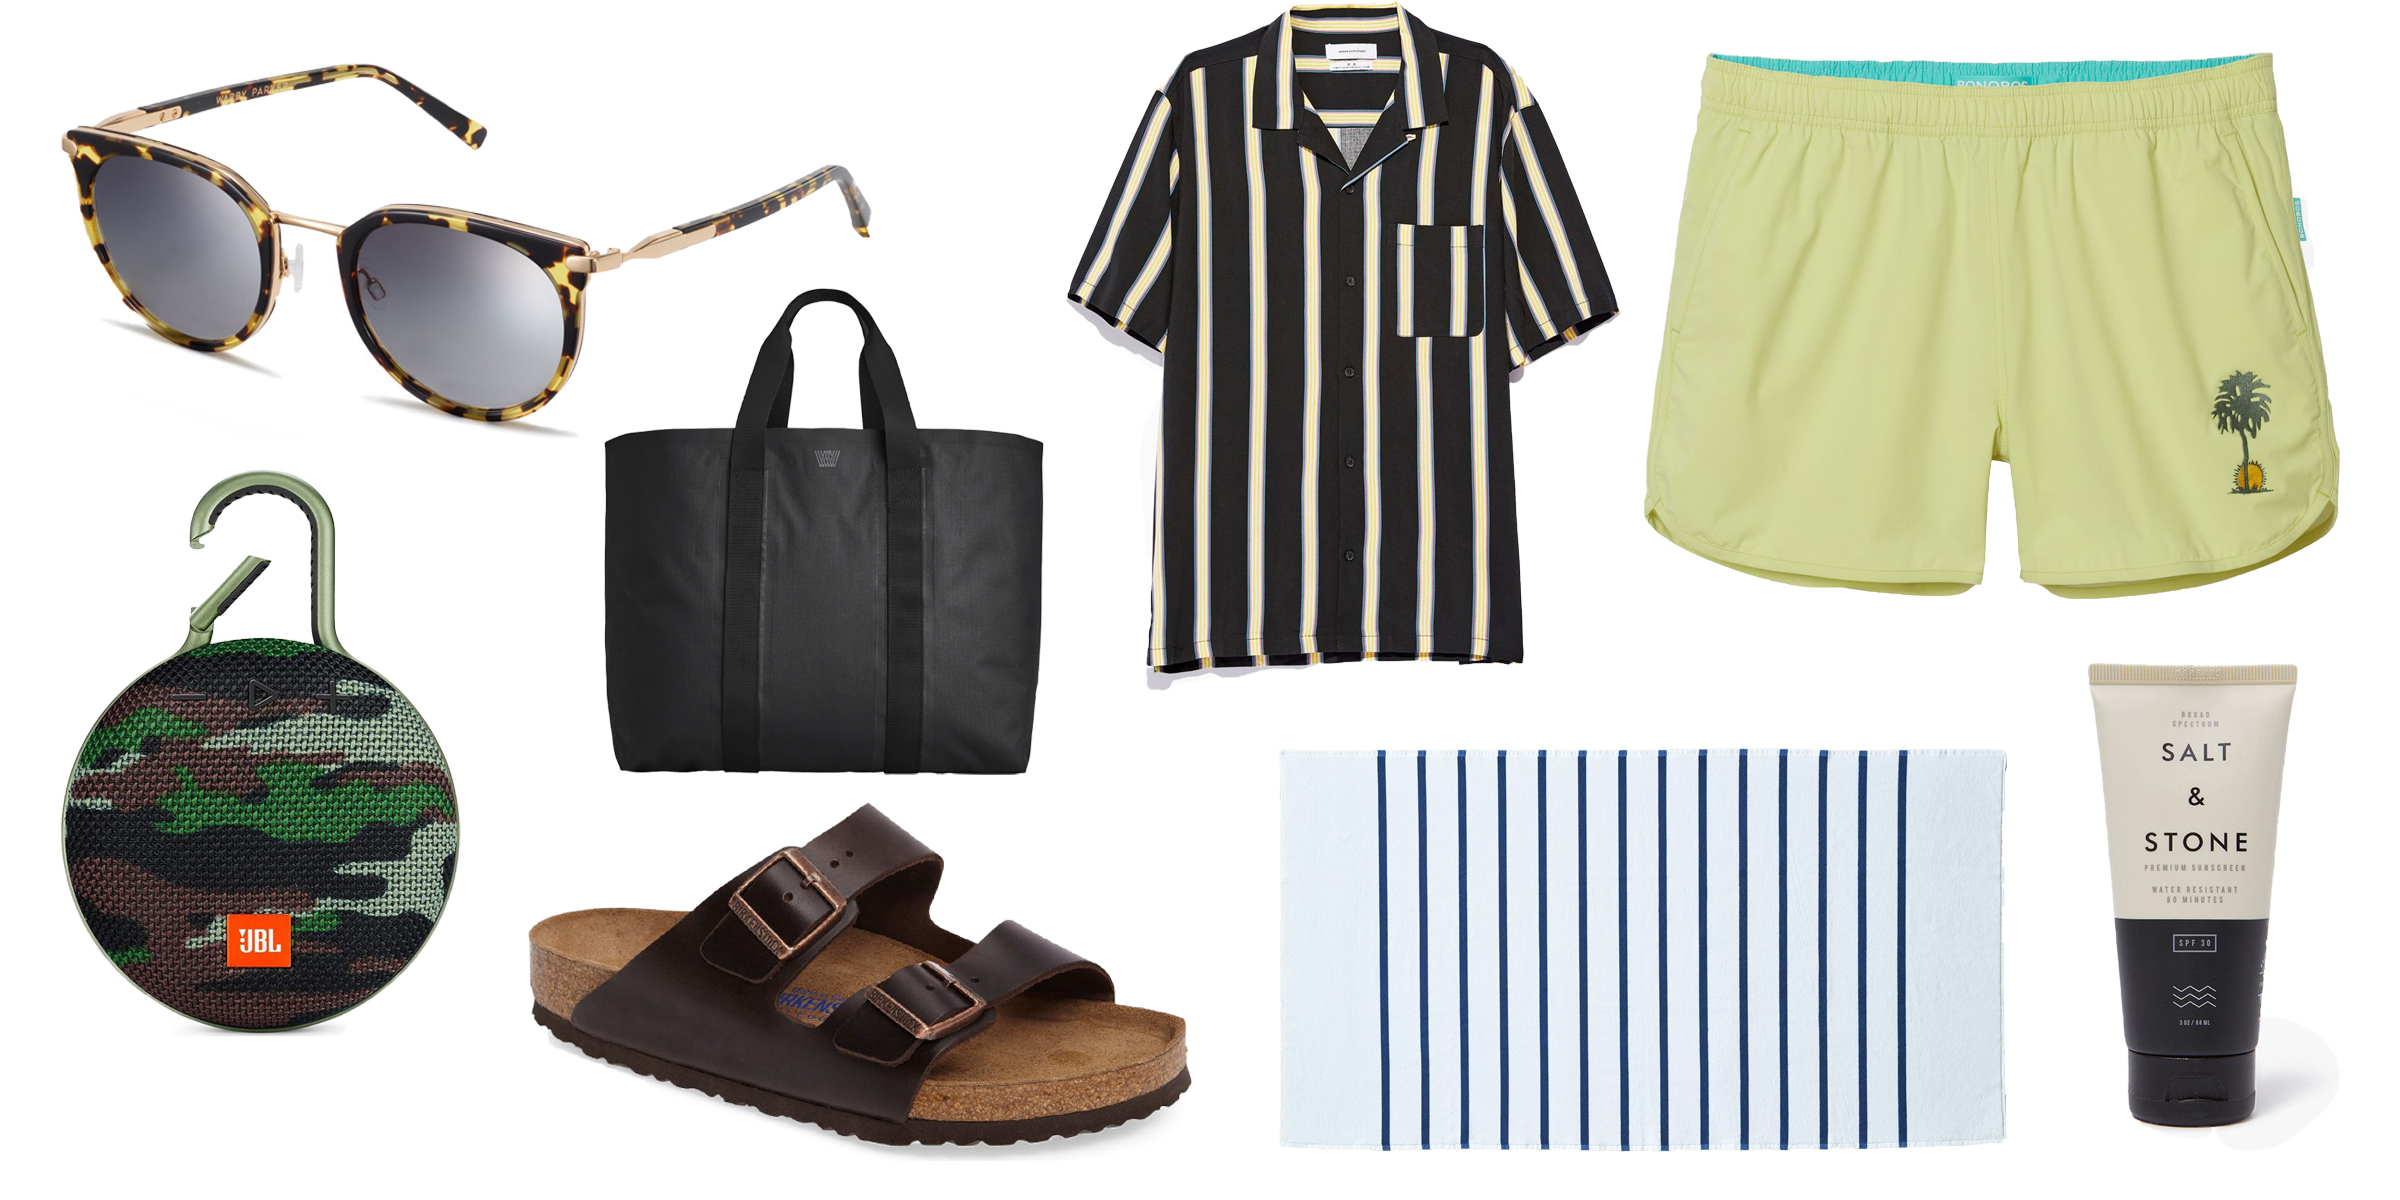 men's beach accessories